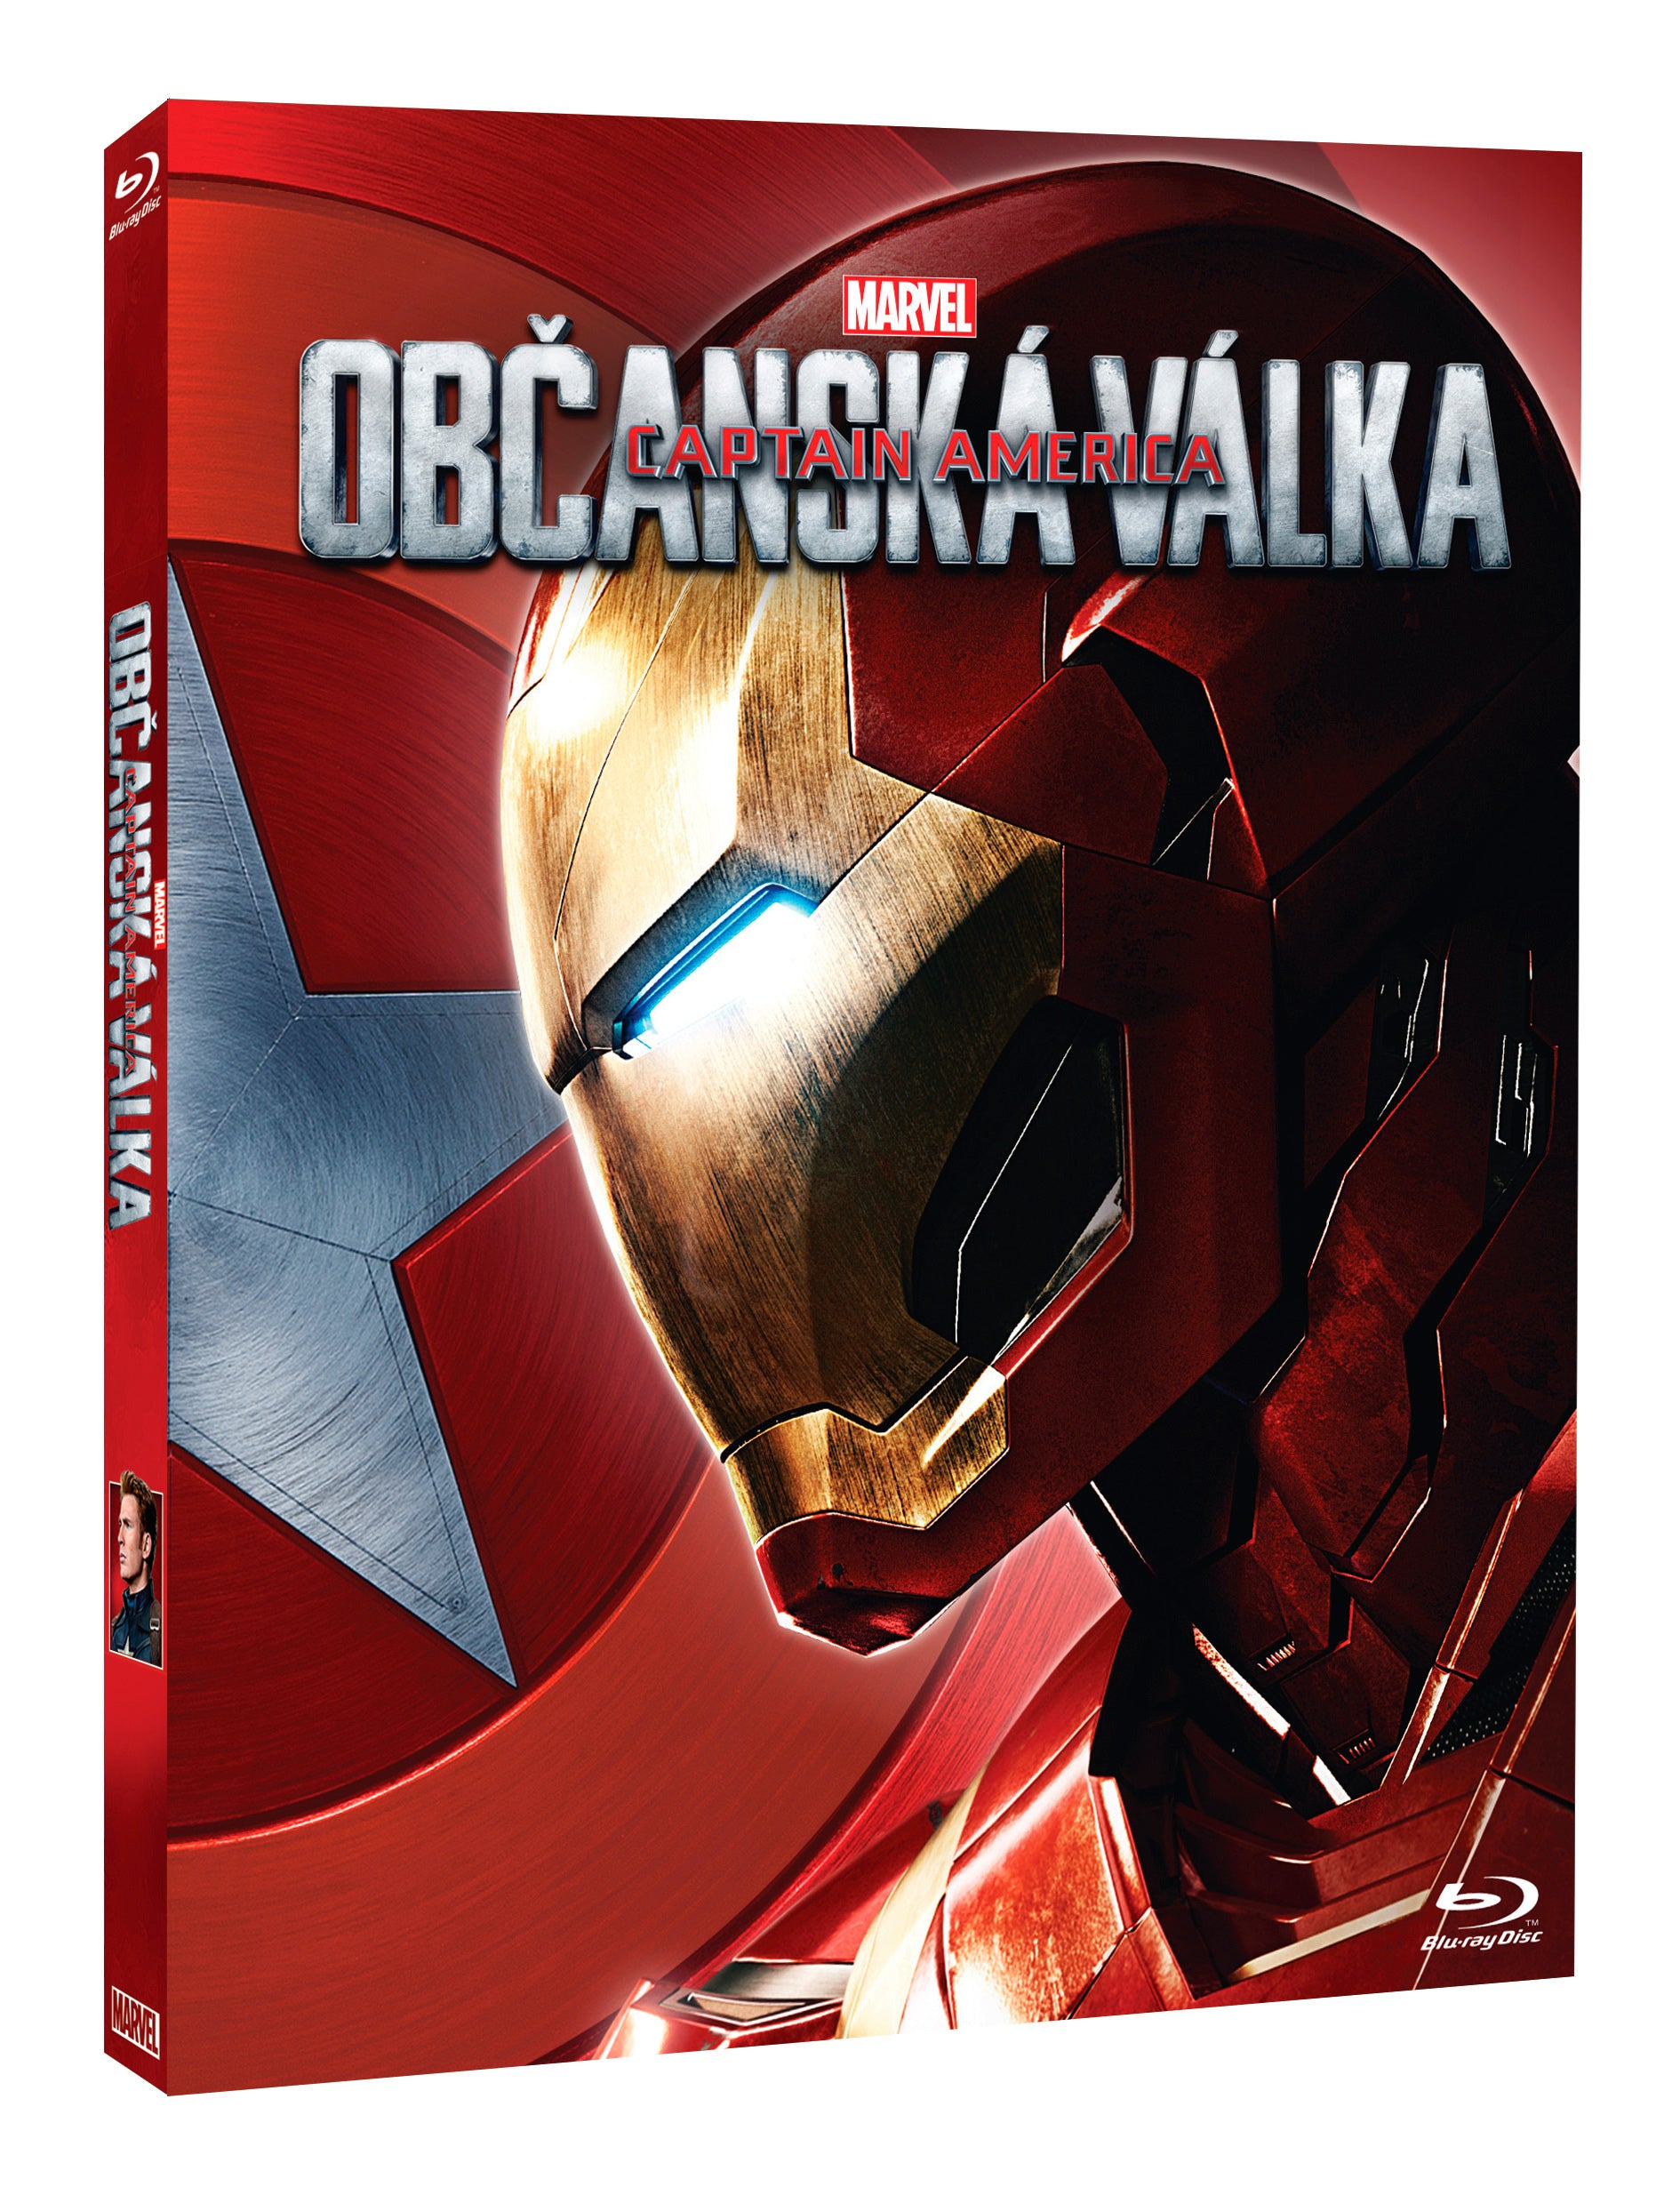 Captain America: Obcanska valka BD - Iron Man / Captain America: Civil War - Czech version